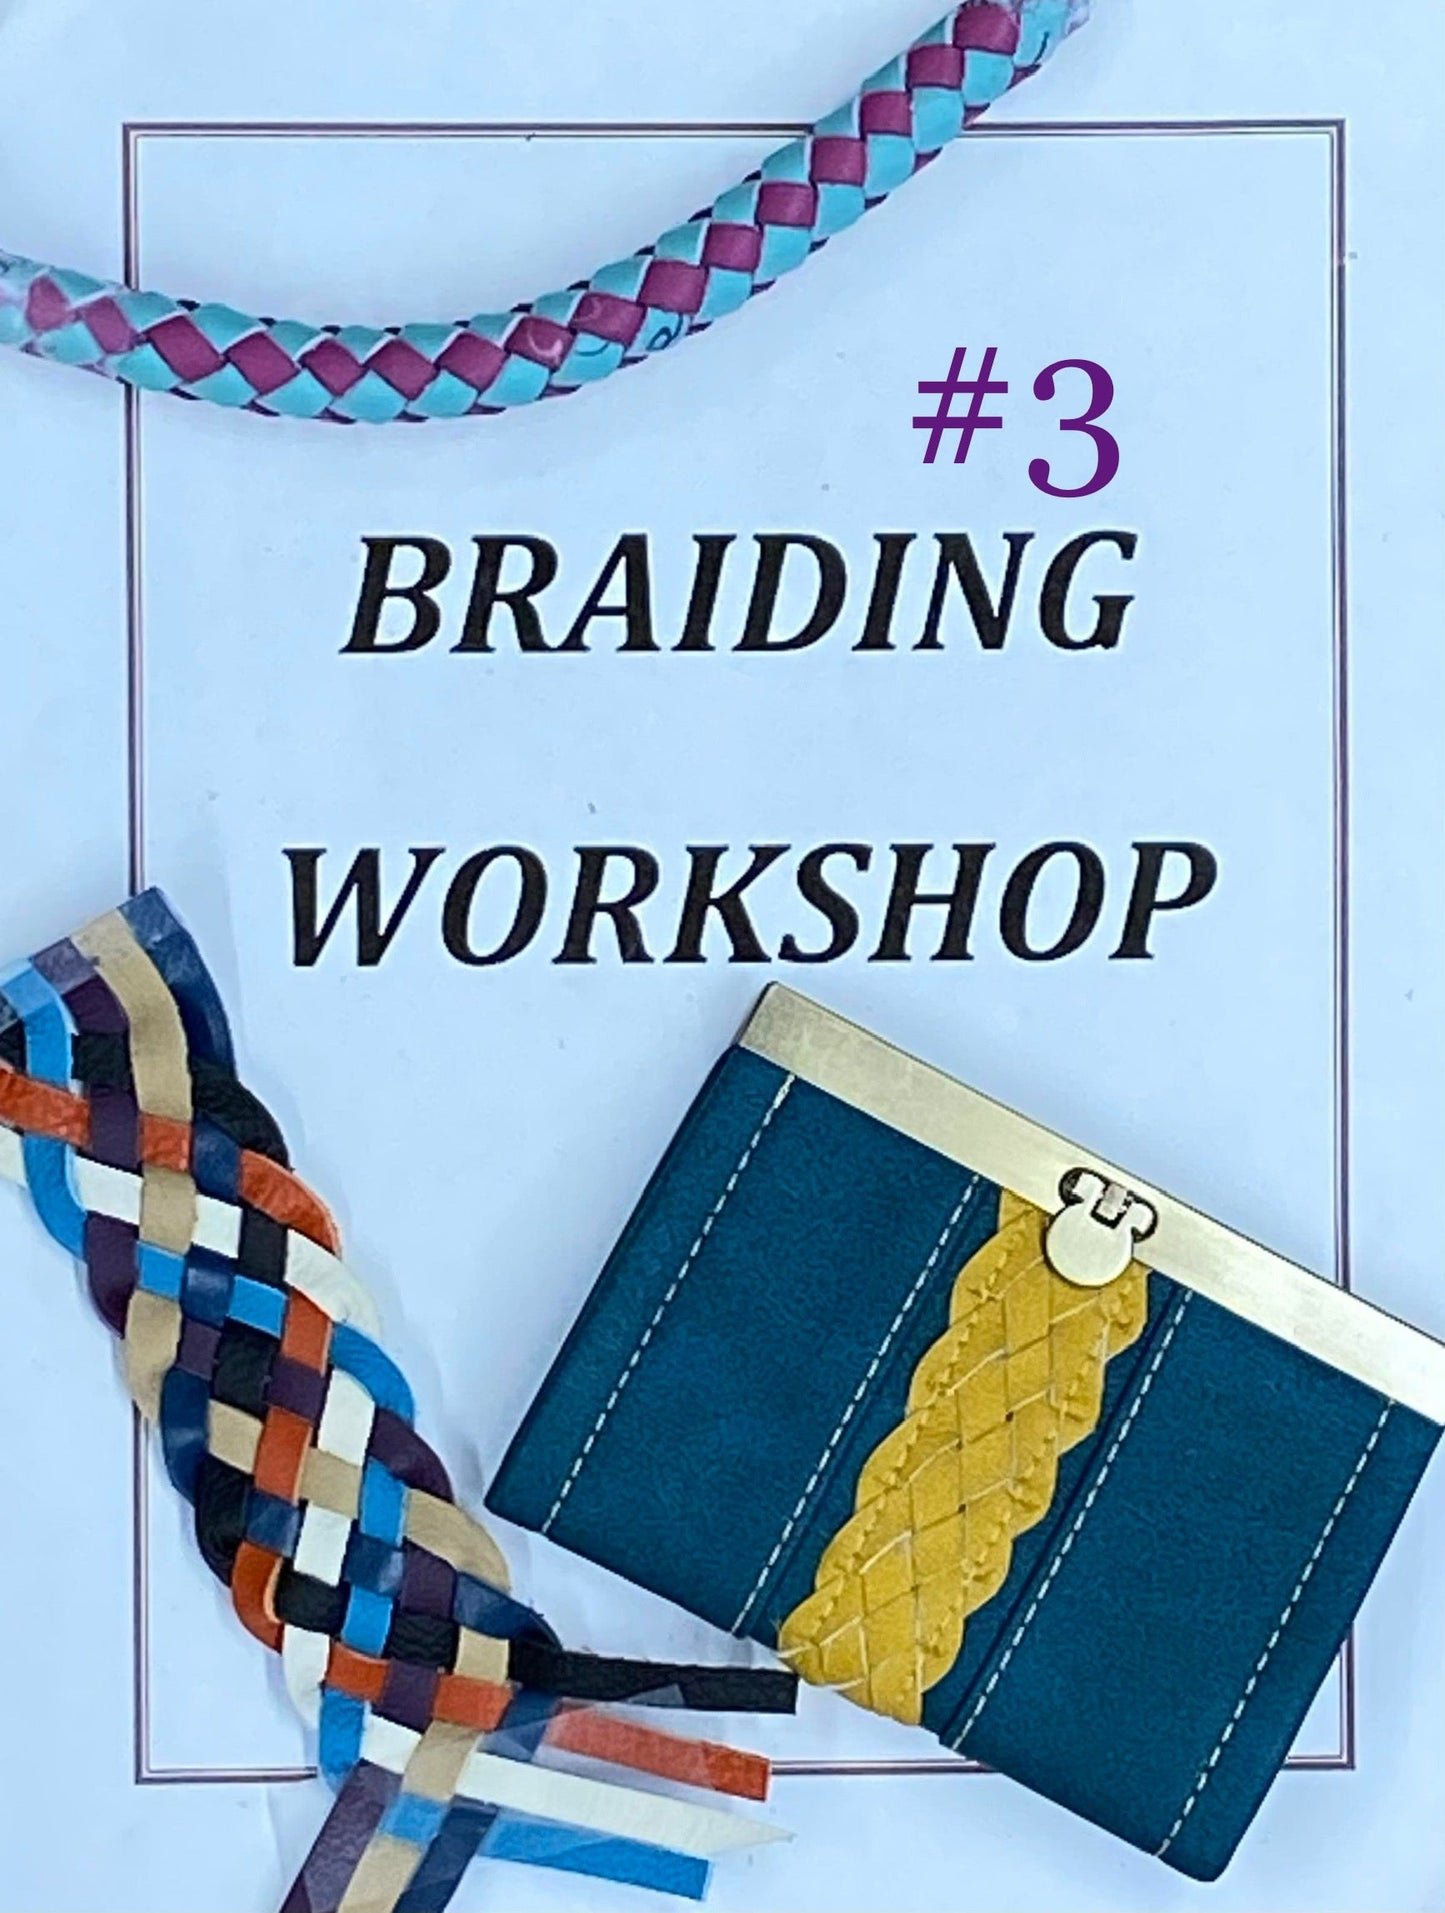 Braiding Workshop #3- Video 2, Session 2